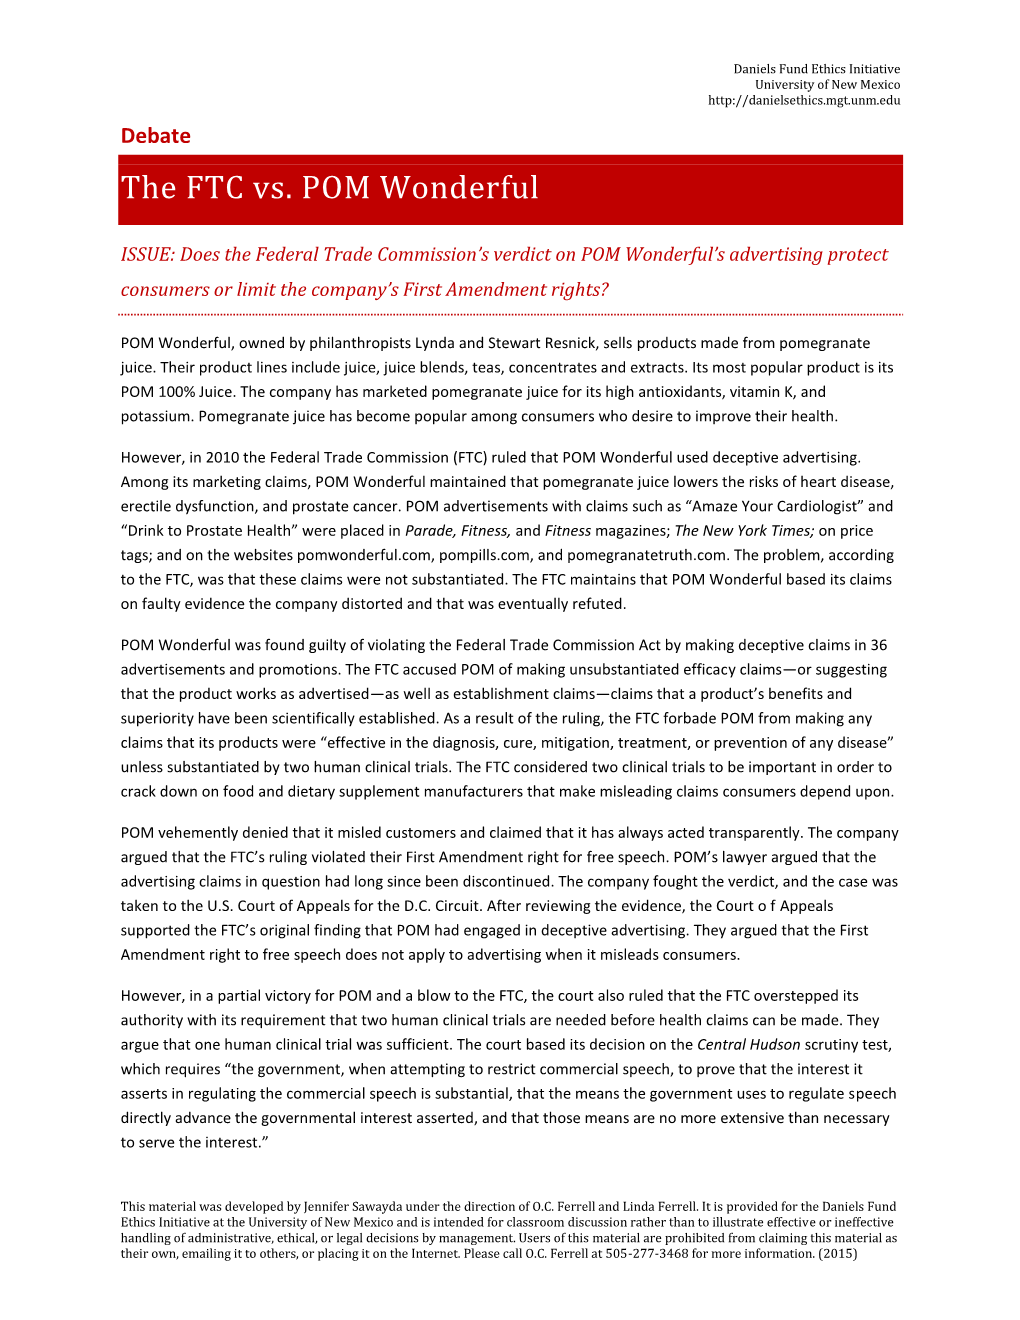 The FTC Vs. POM Wonderful